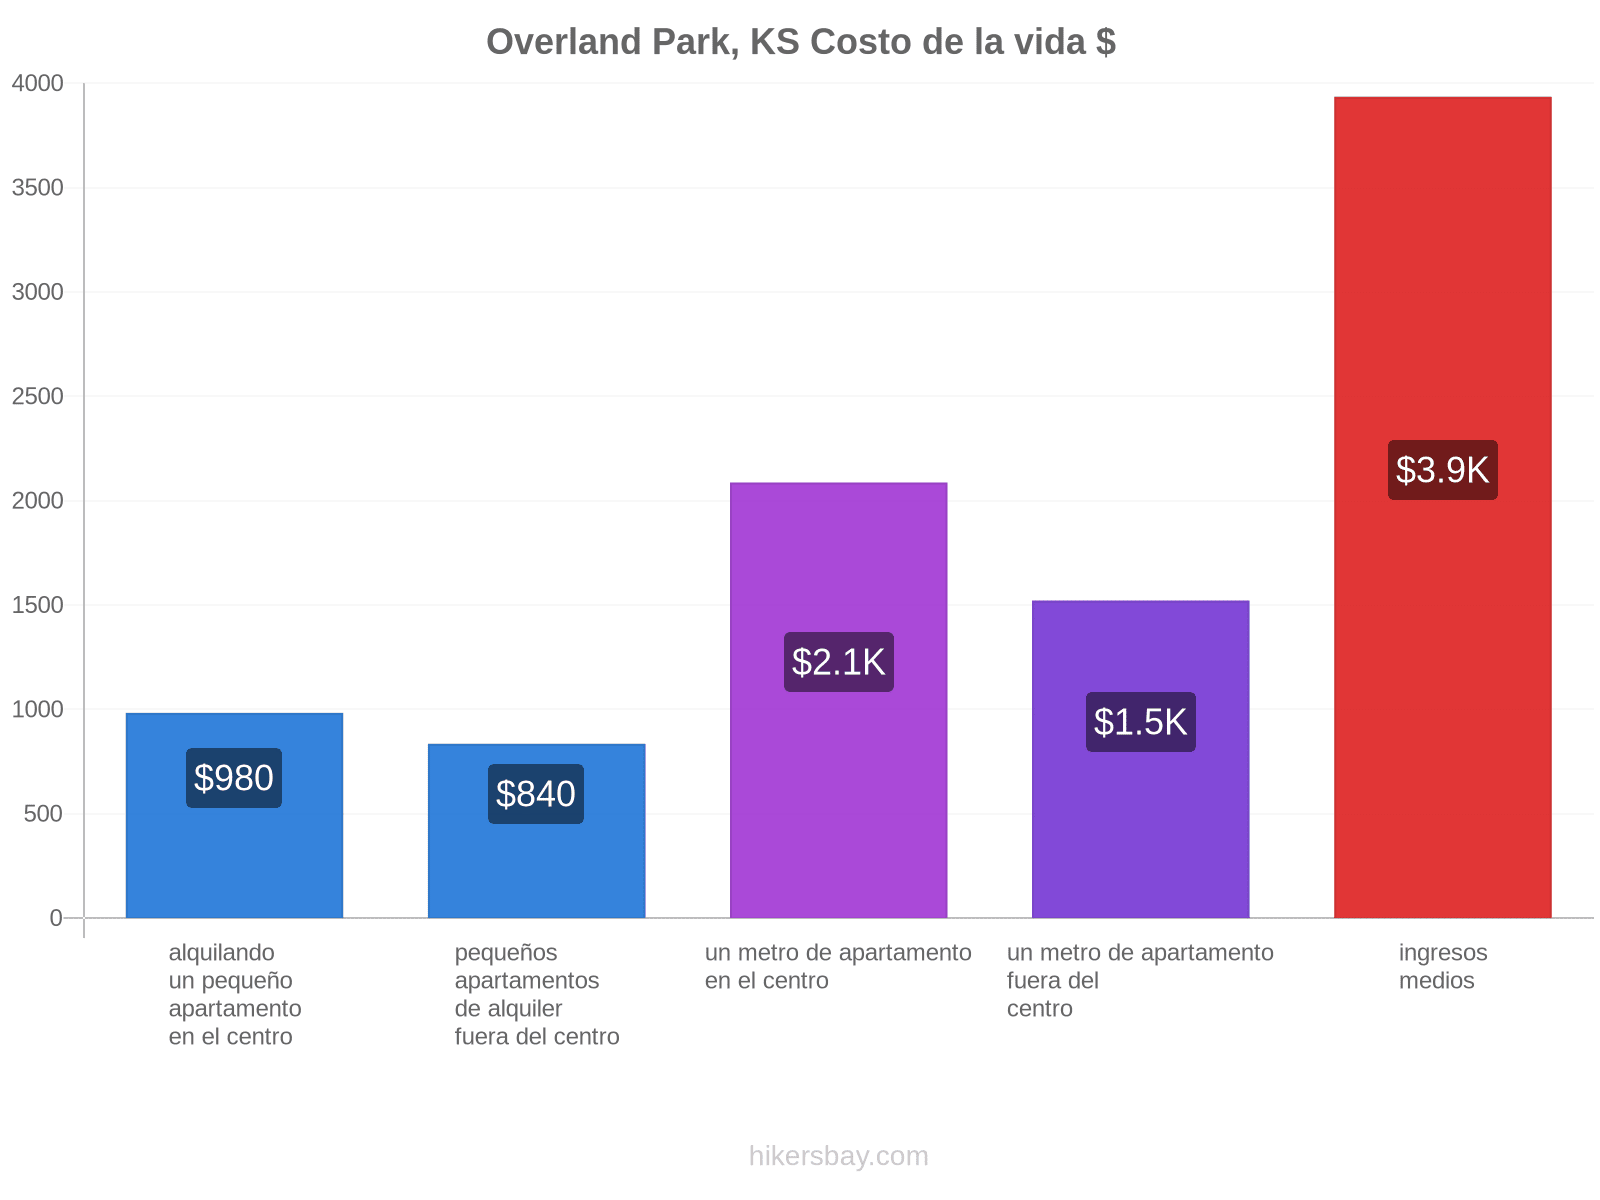 Overland Park, KS costo de la vida hikersbay.com